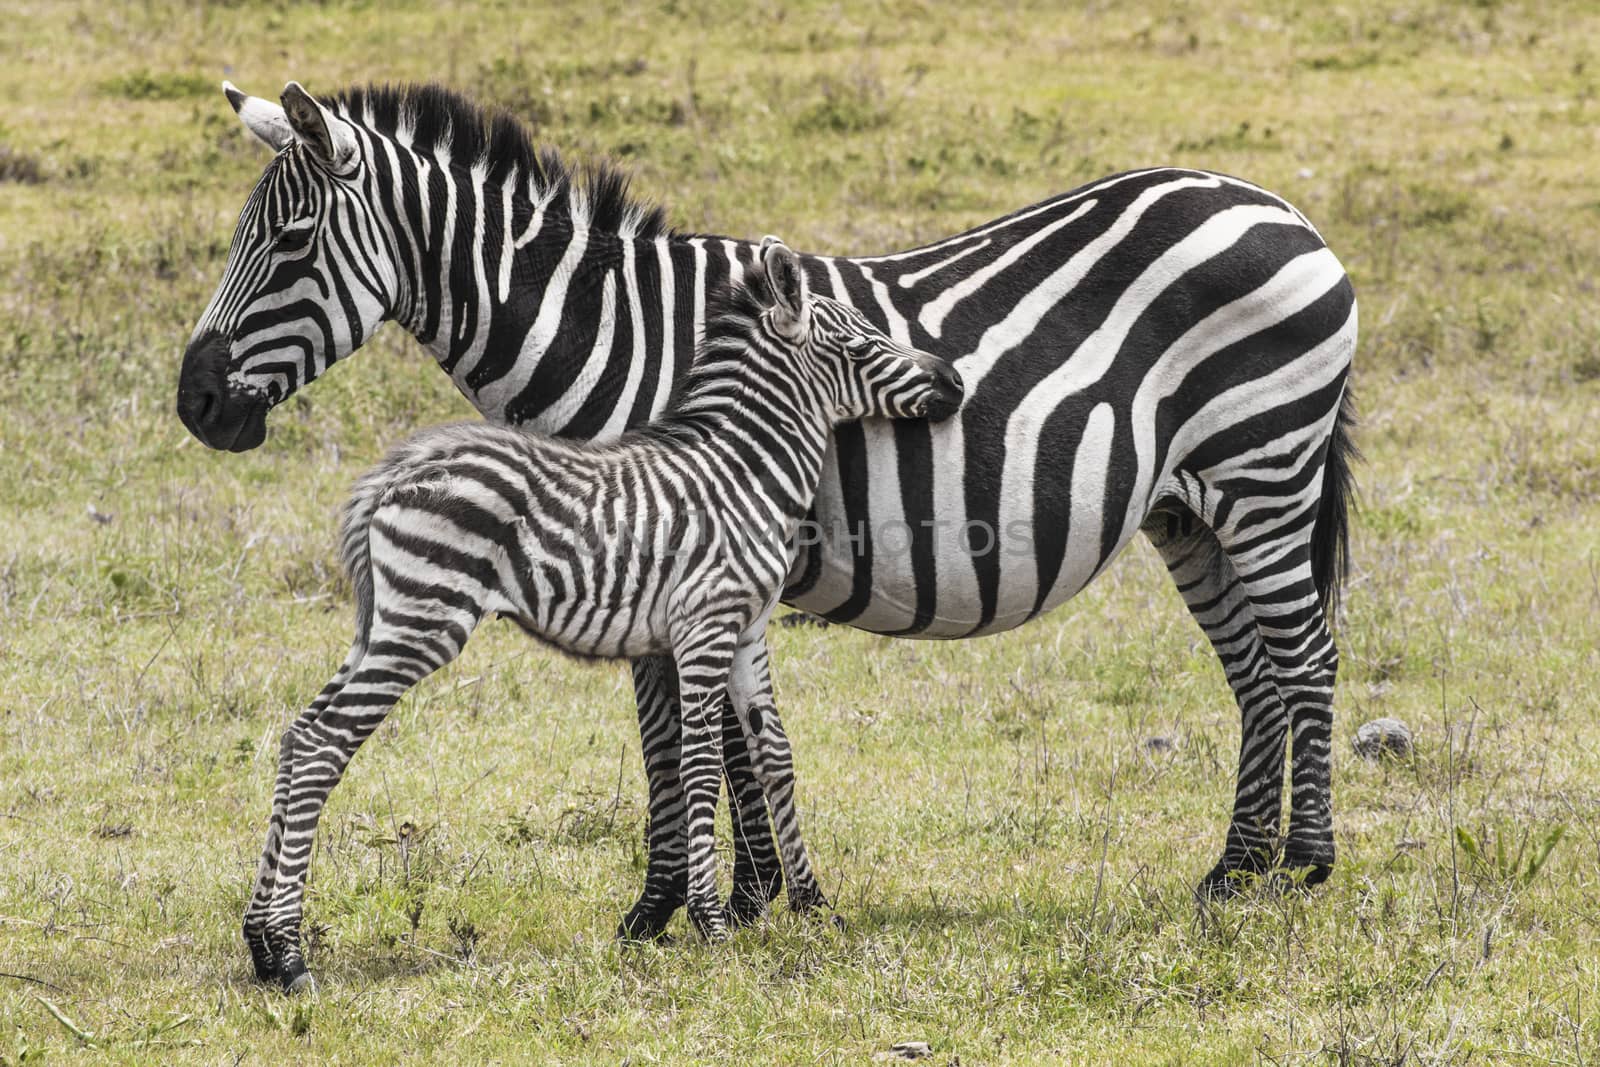 Zebras in Ngorongoro conservation area, Tanzania by mariusz_prusaczyk